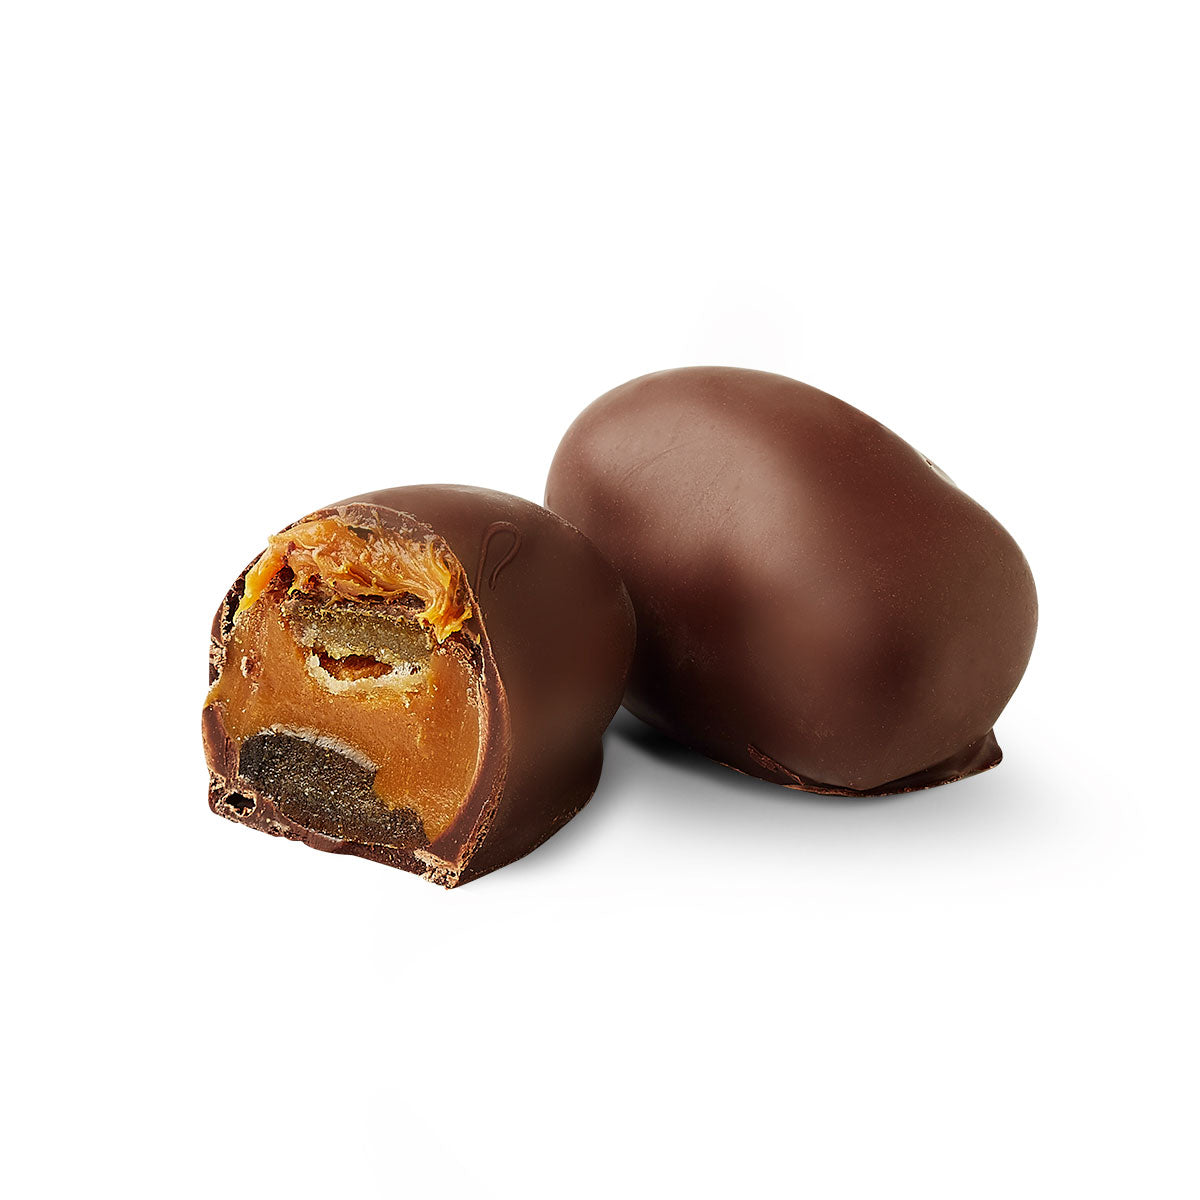 Orange Chocolate Caramel: Gourmet 0.92oz | 45% Cacao, Gluten-Free